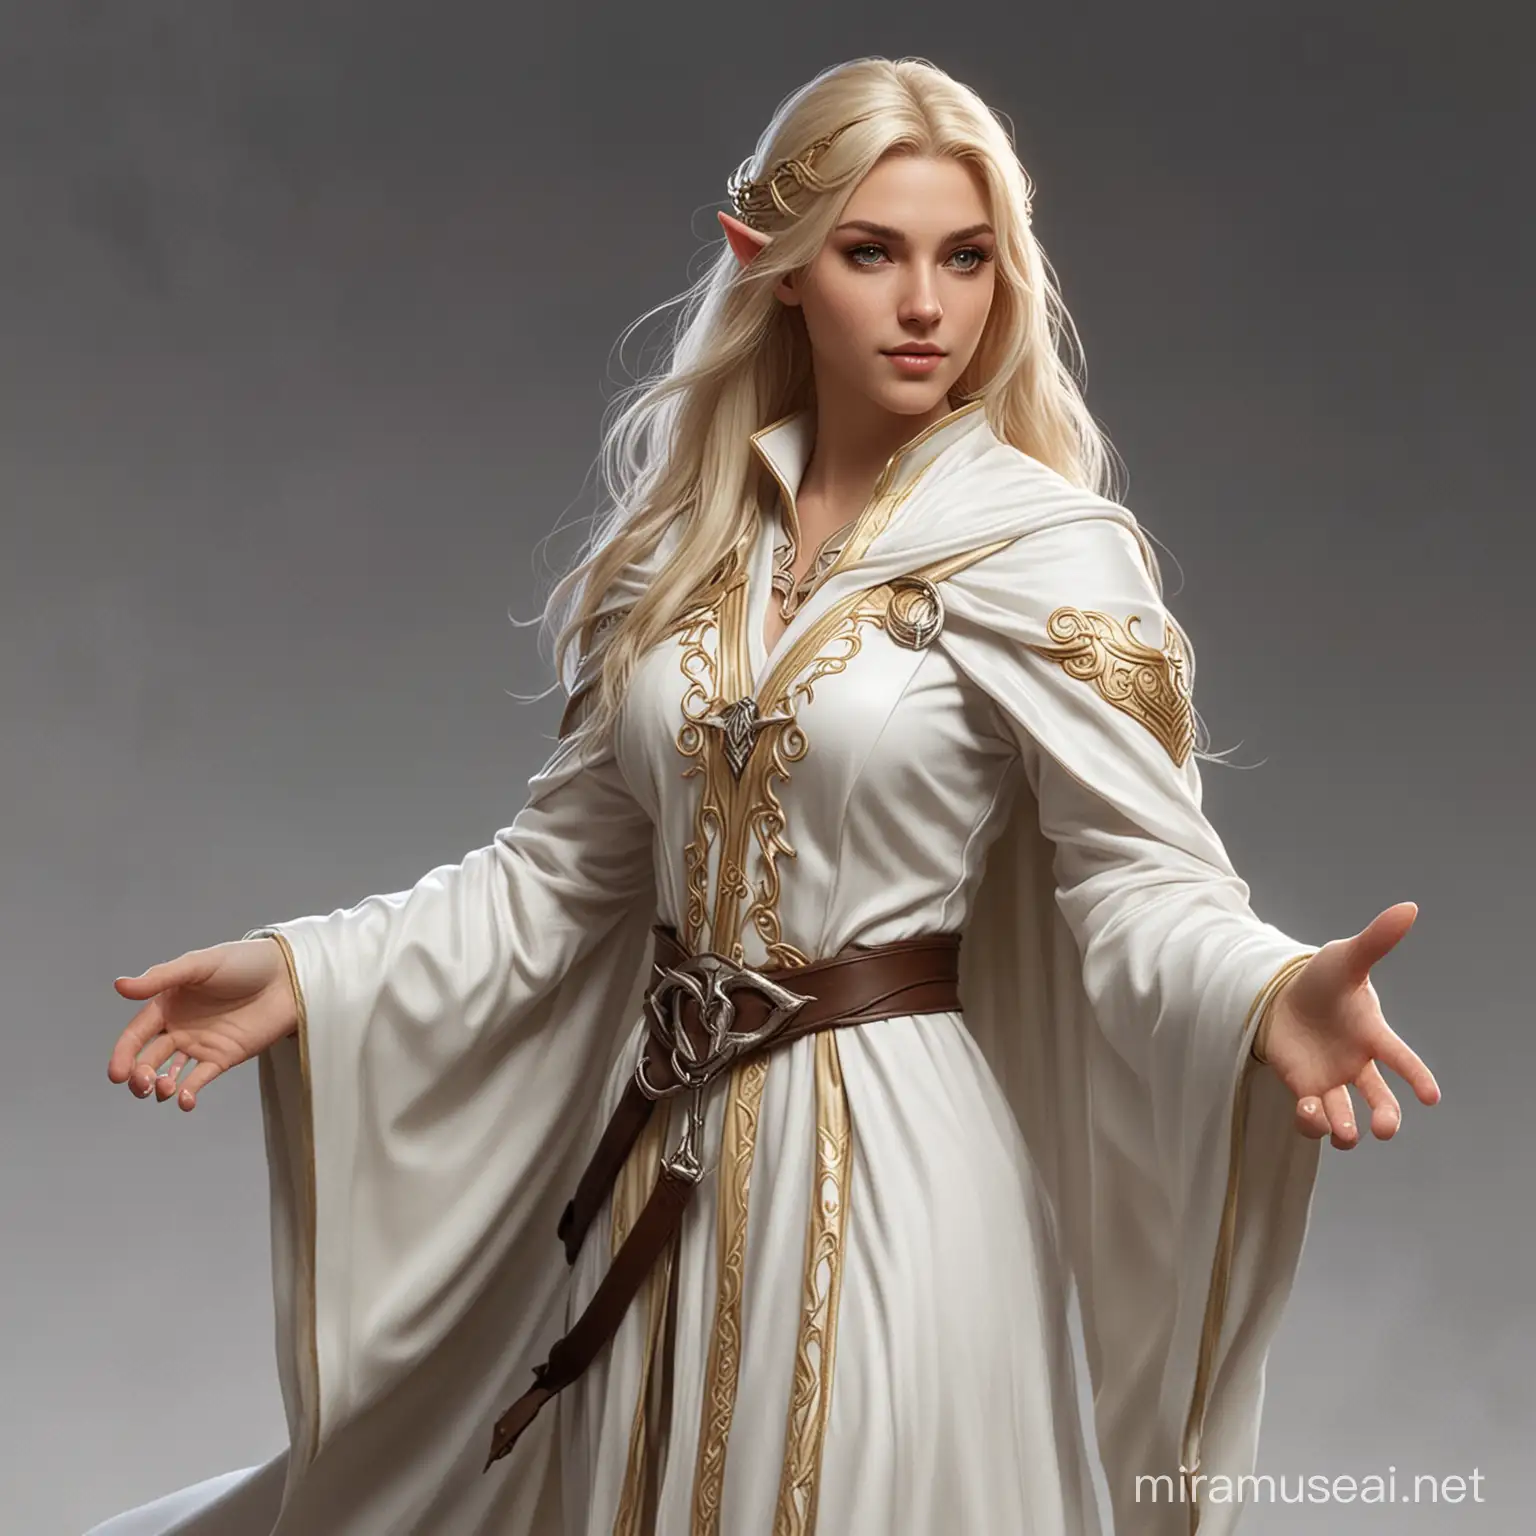 Kind HalfElf Female Cleric in White Robes